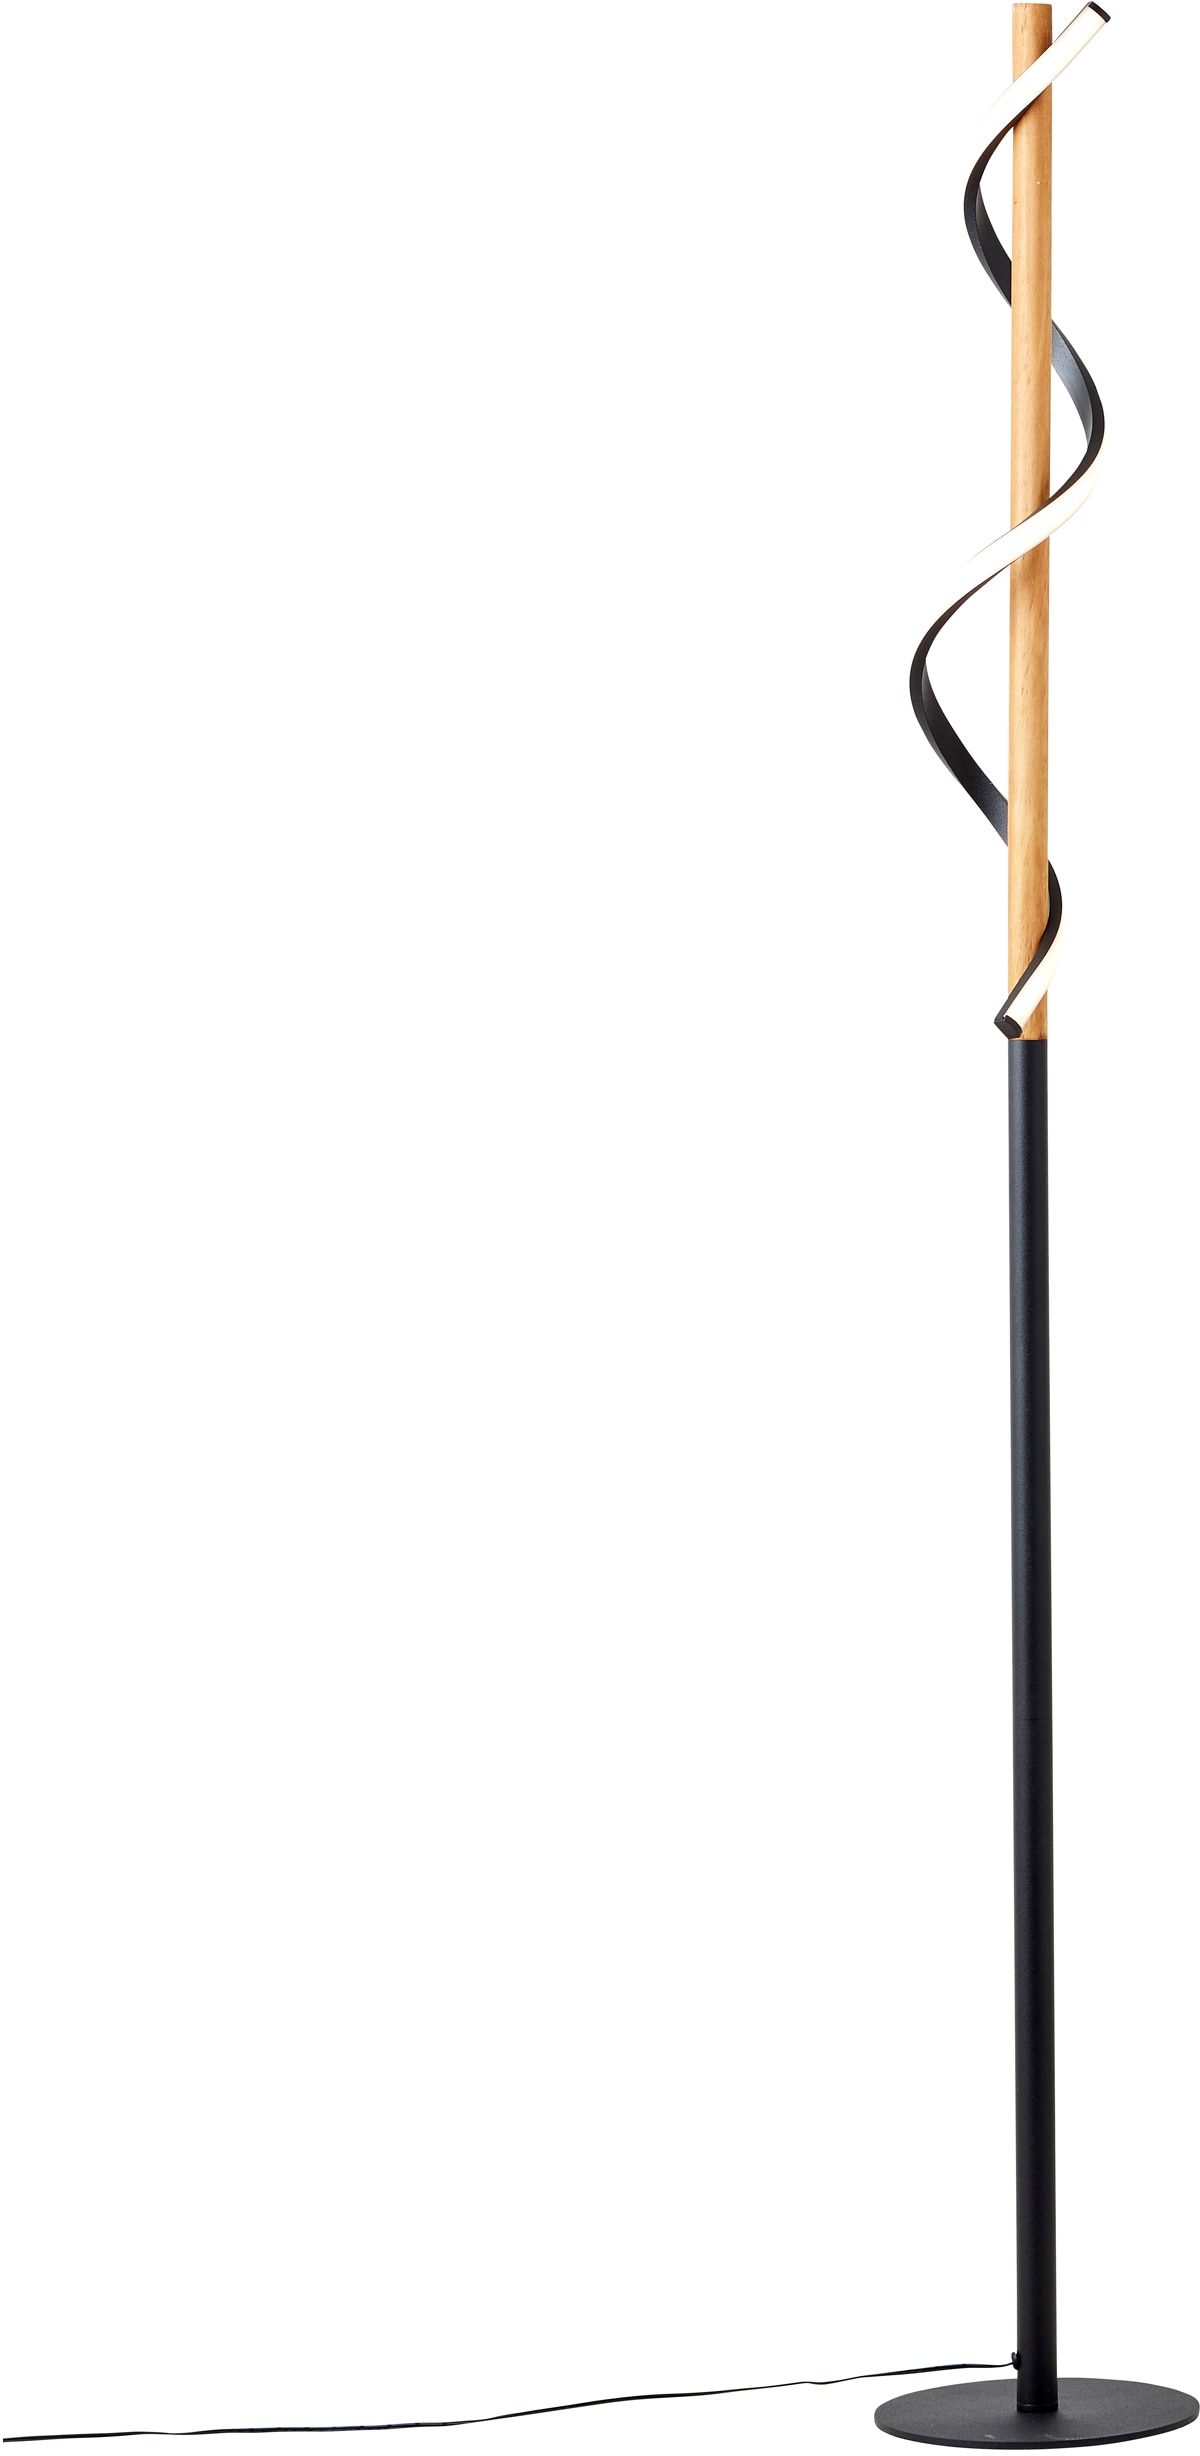 Home affaire Stehlampe »Amanlis«, 1 flammig-flammig, 150 cm Höhe, 2400 Lumen, warmweißes Licht, Holz / Metall / Kunststoff